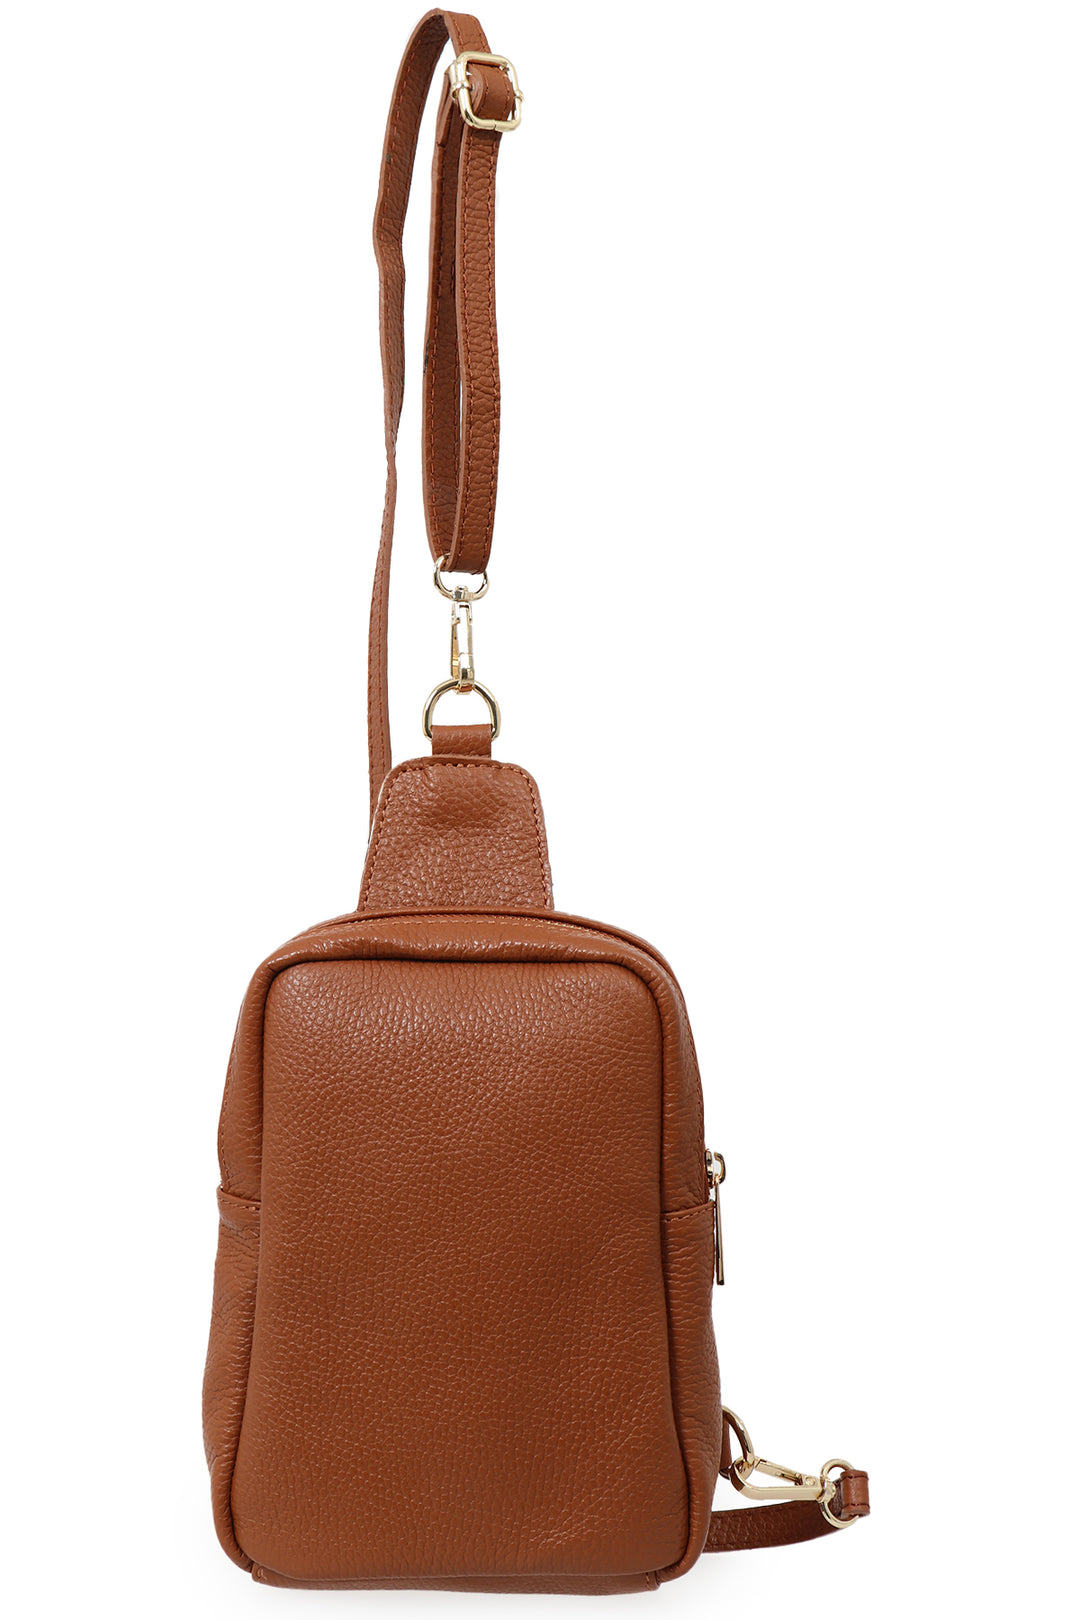 Tan Genuine Italian Leather Sling Bag